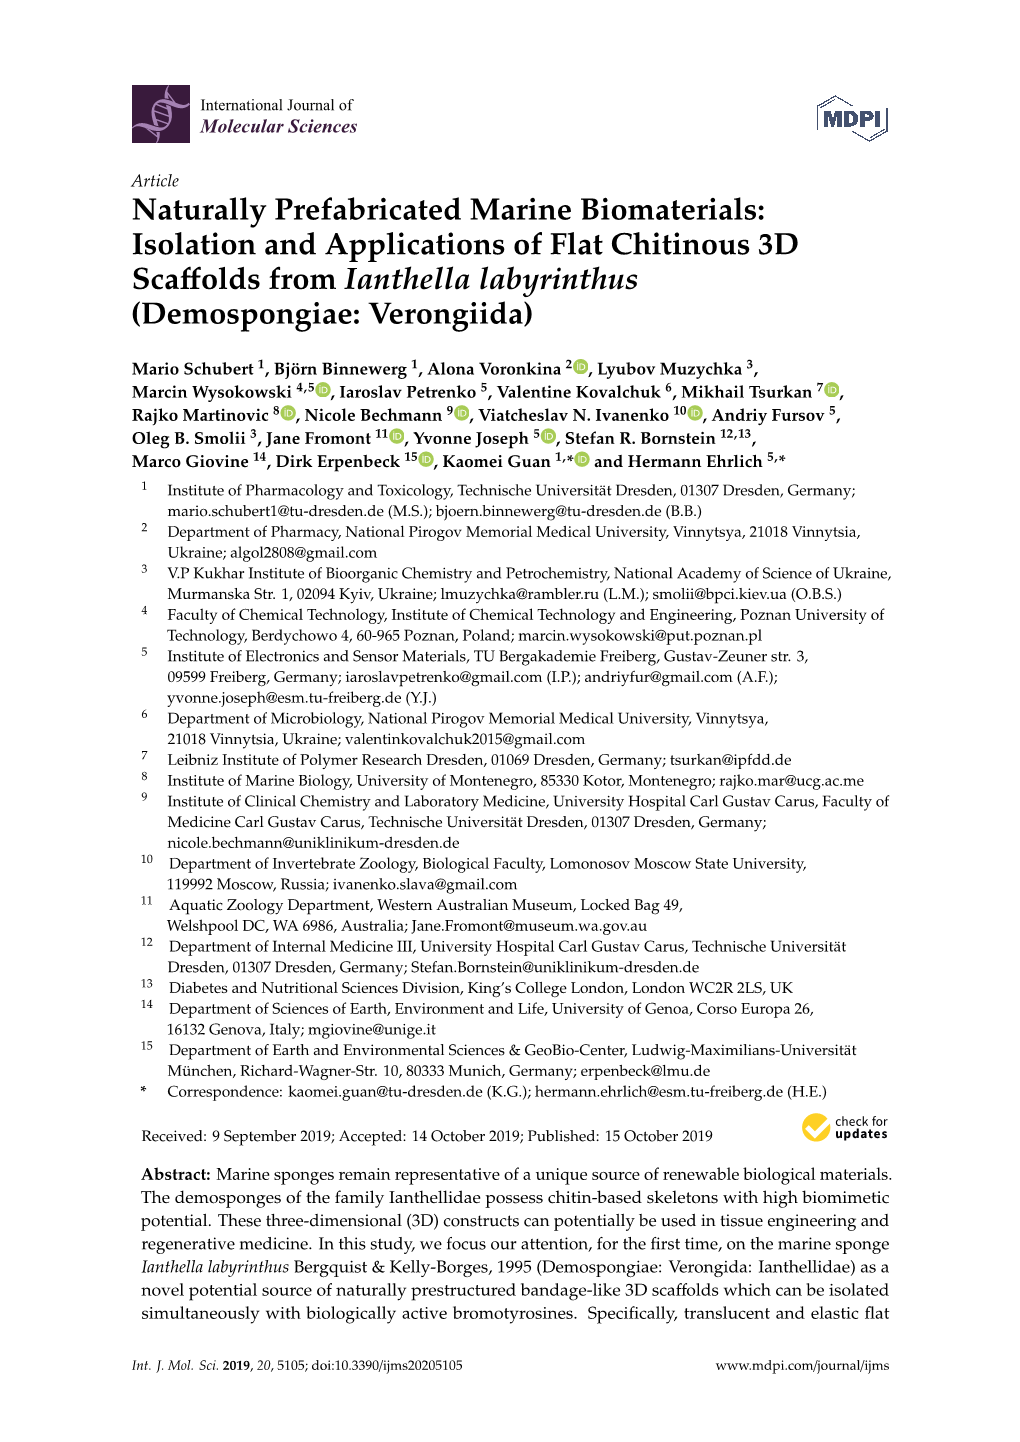 Naturally Prefabricated Marine Biomaterials: Isolation and Applications of Flat Chitinous 3D Scaﬀolds from Ianthella Labyrinthus (Demospongiae: Verongiida)